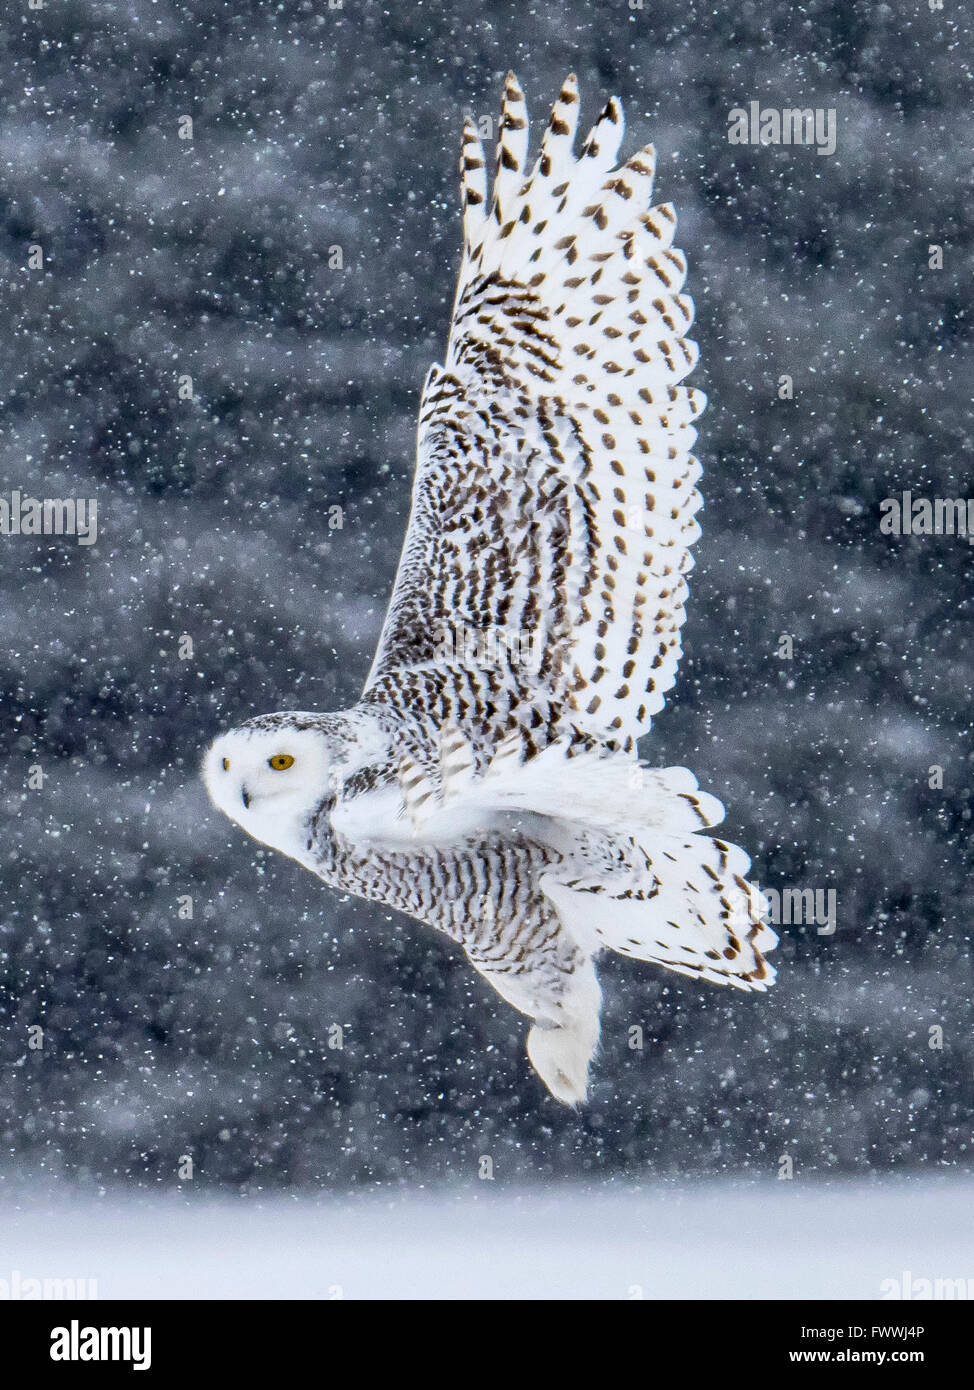 Snowy owl in flight in the snow Stock Photo